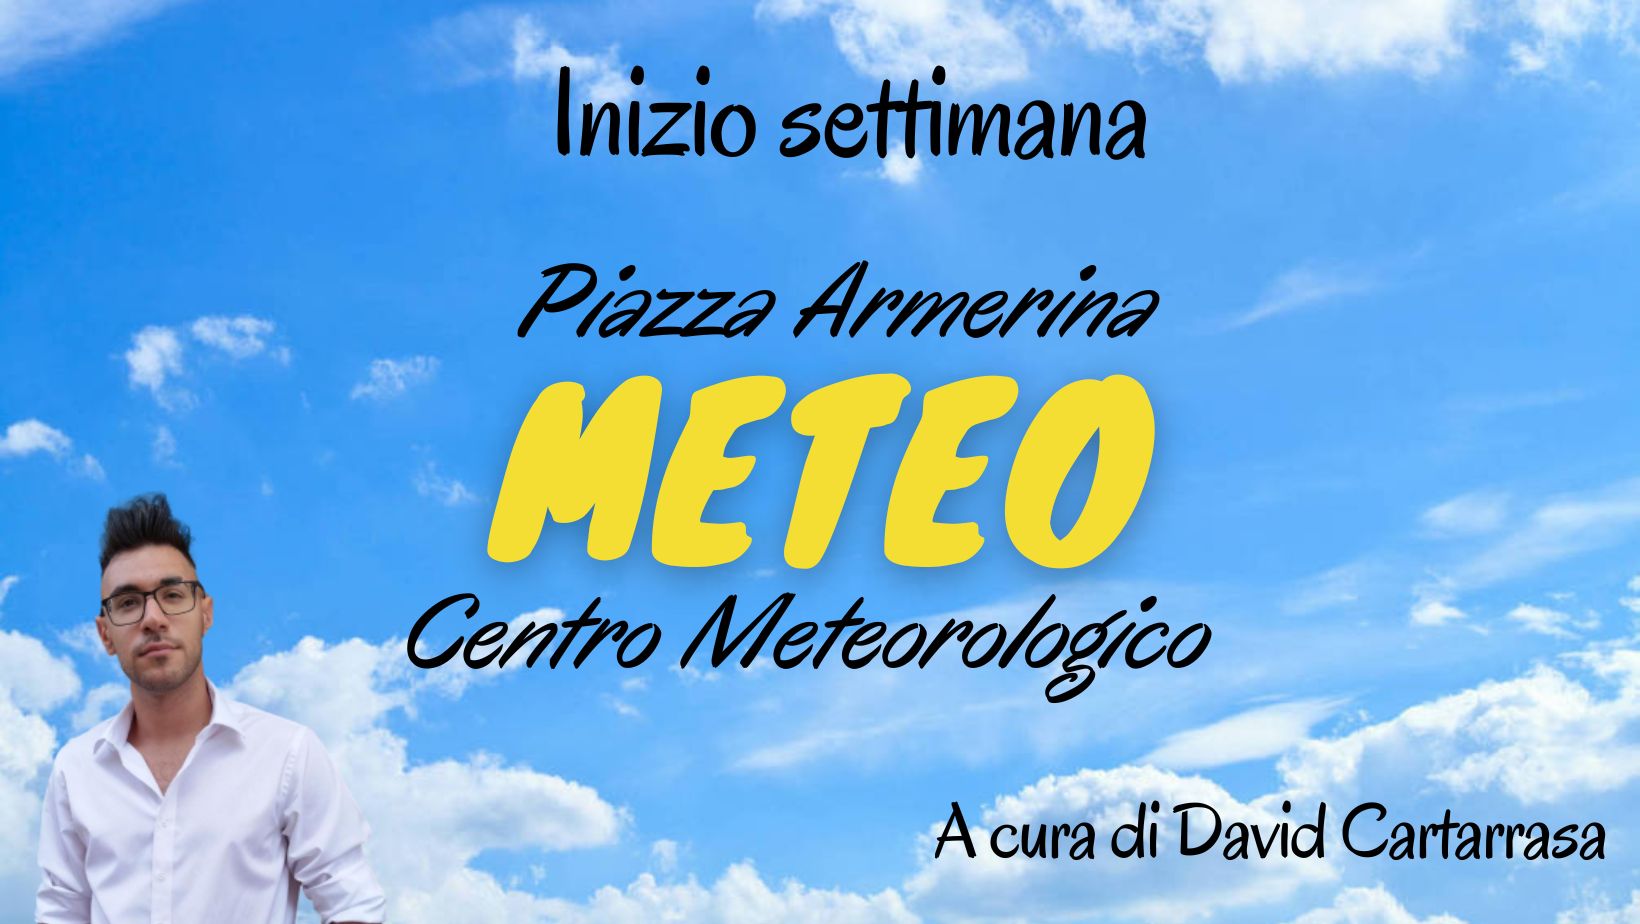 Meteo Piazza Armerina : martedì 24 gennaio tra nuvole e pioggie